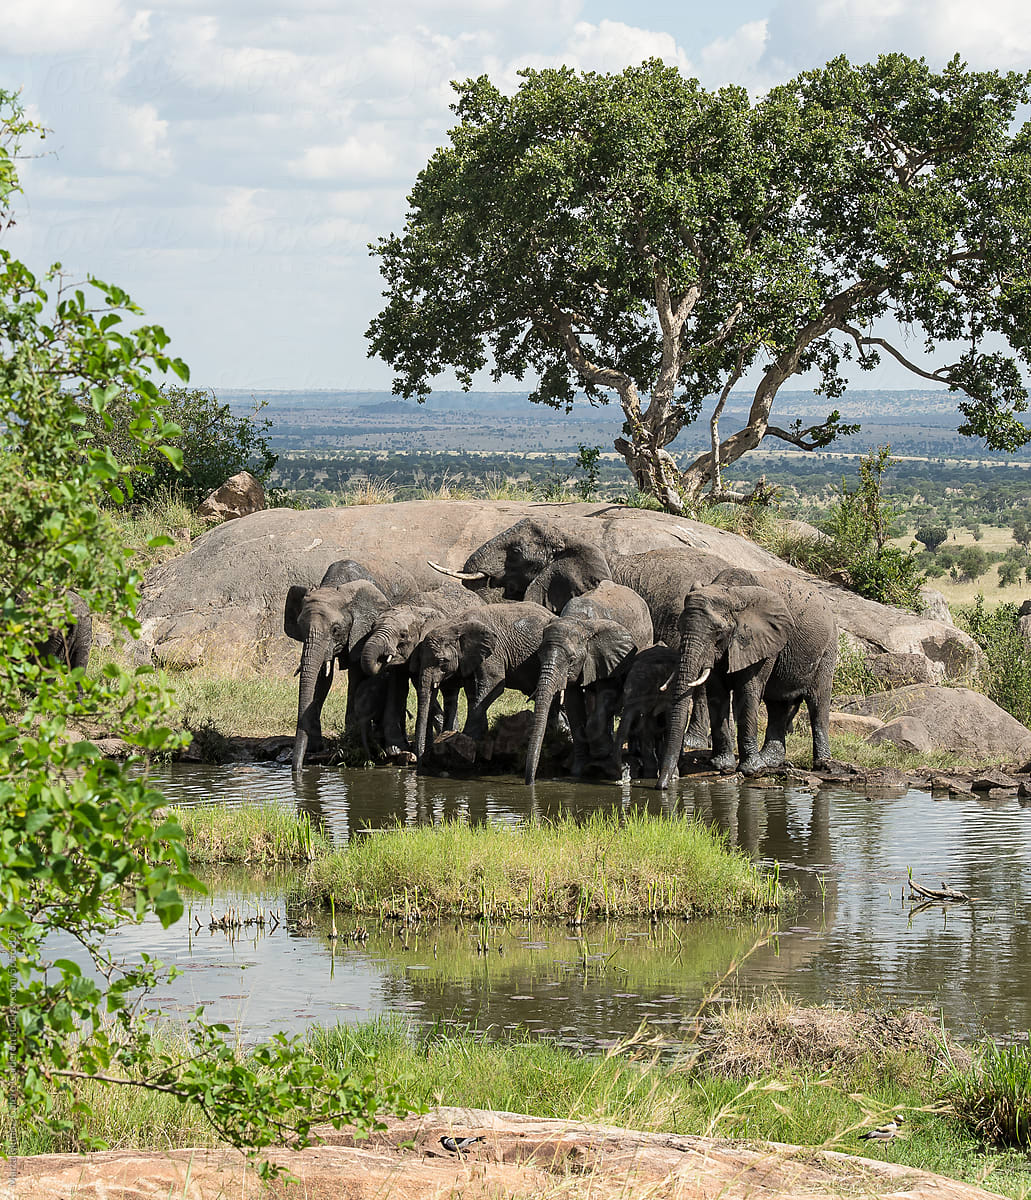 Group of elephants huddled together drinking